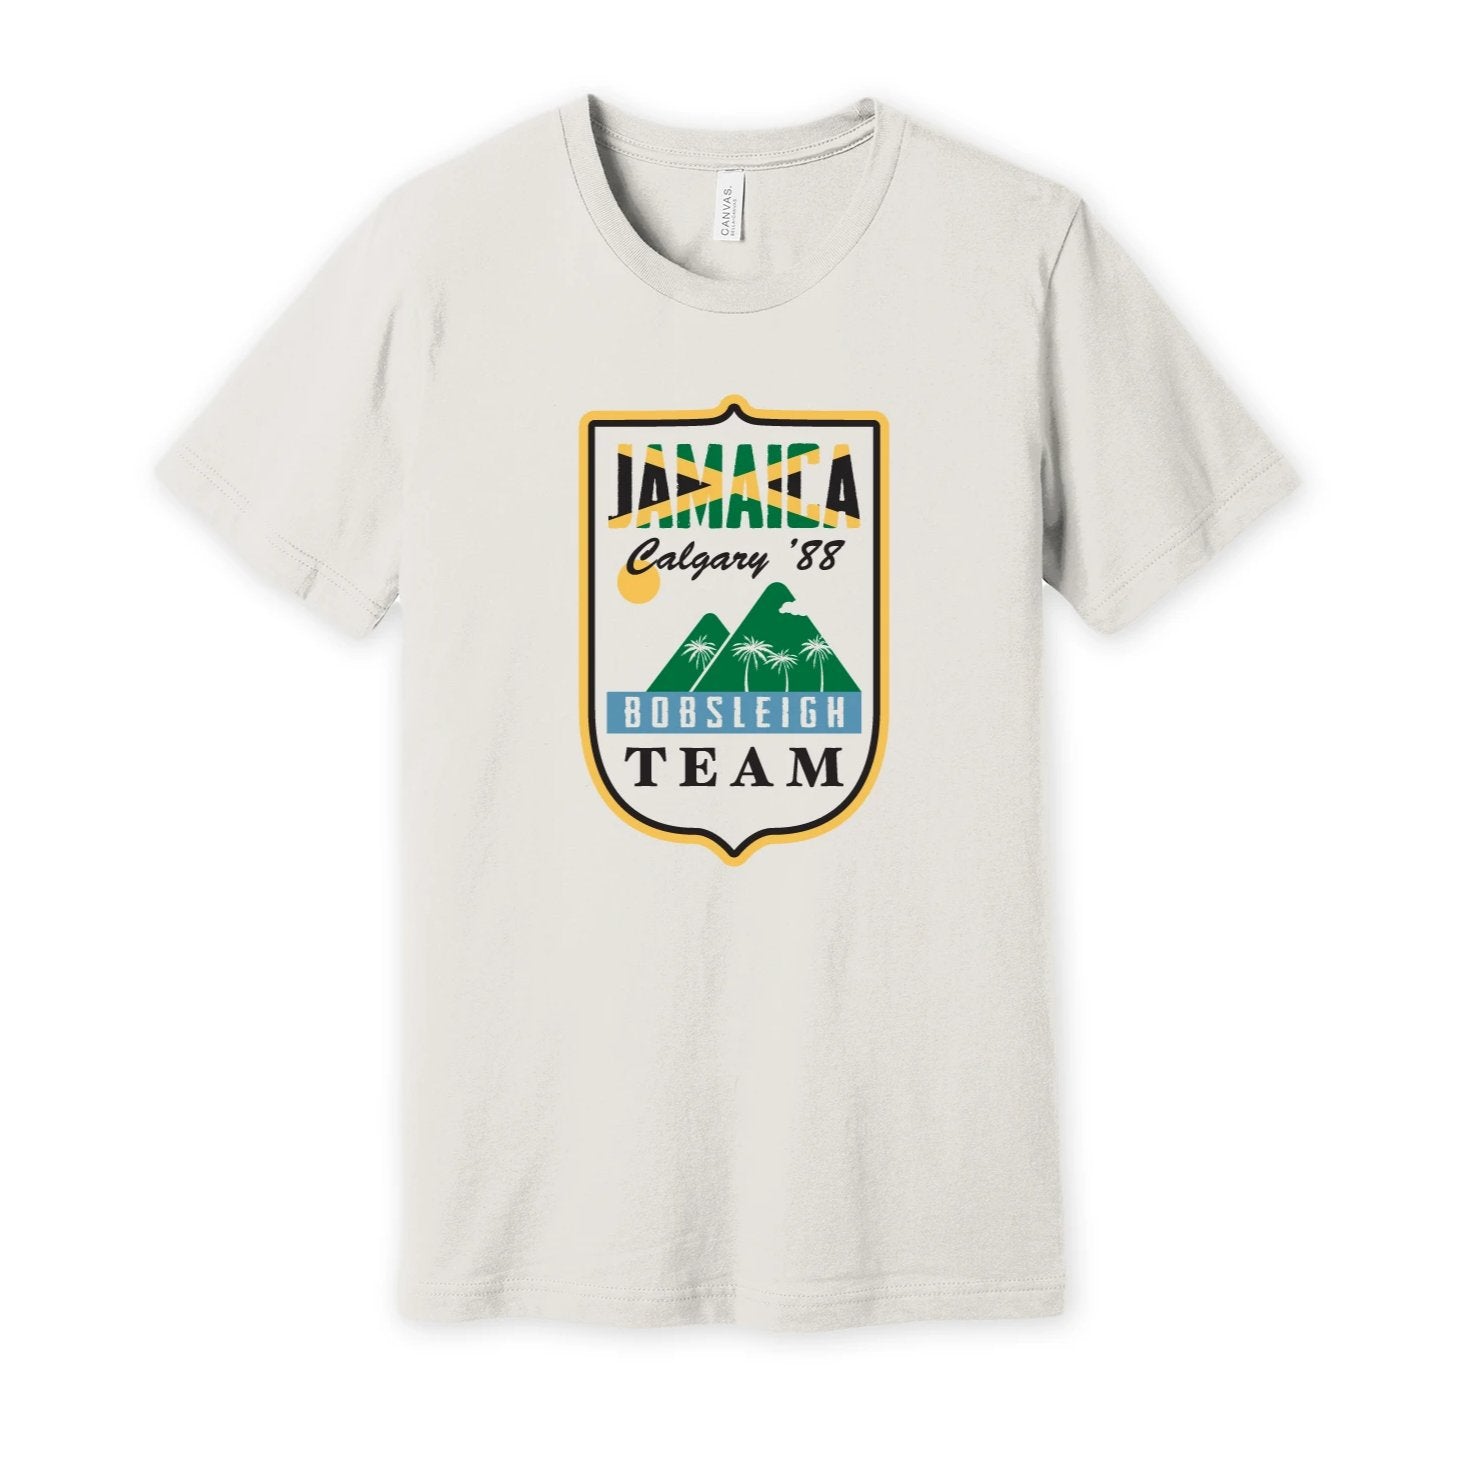 Cool Runnings Jamaica Bobsled Team 88' Calgary Olympics Vintage Shirt Vintage WHite